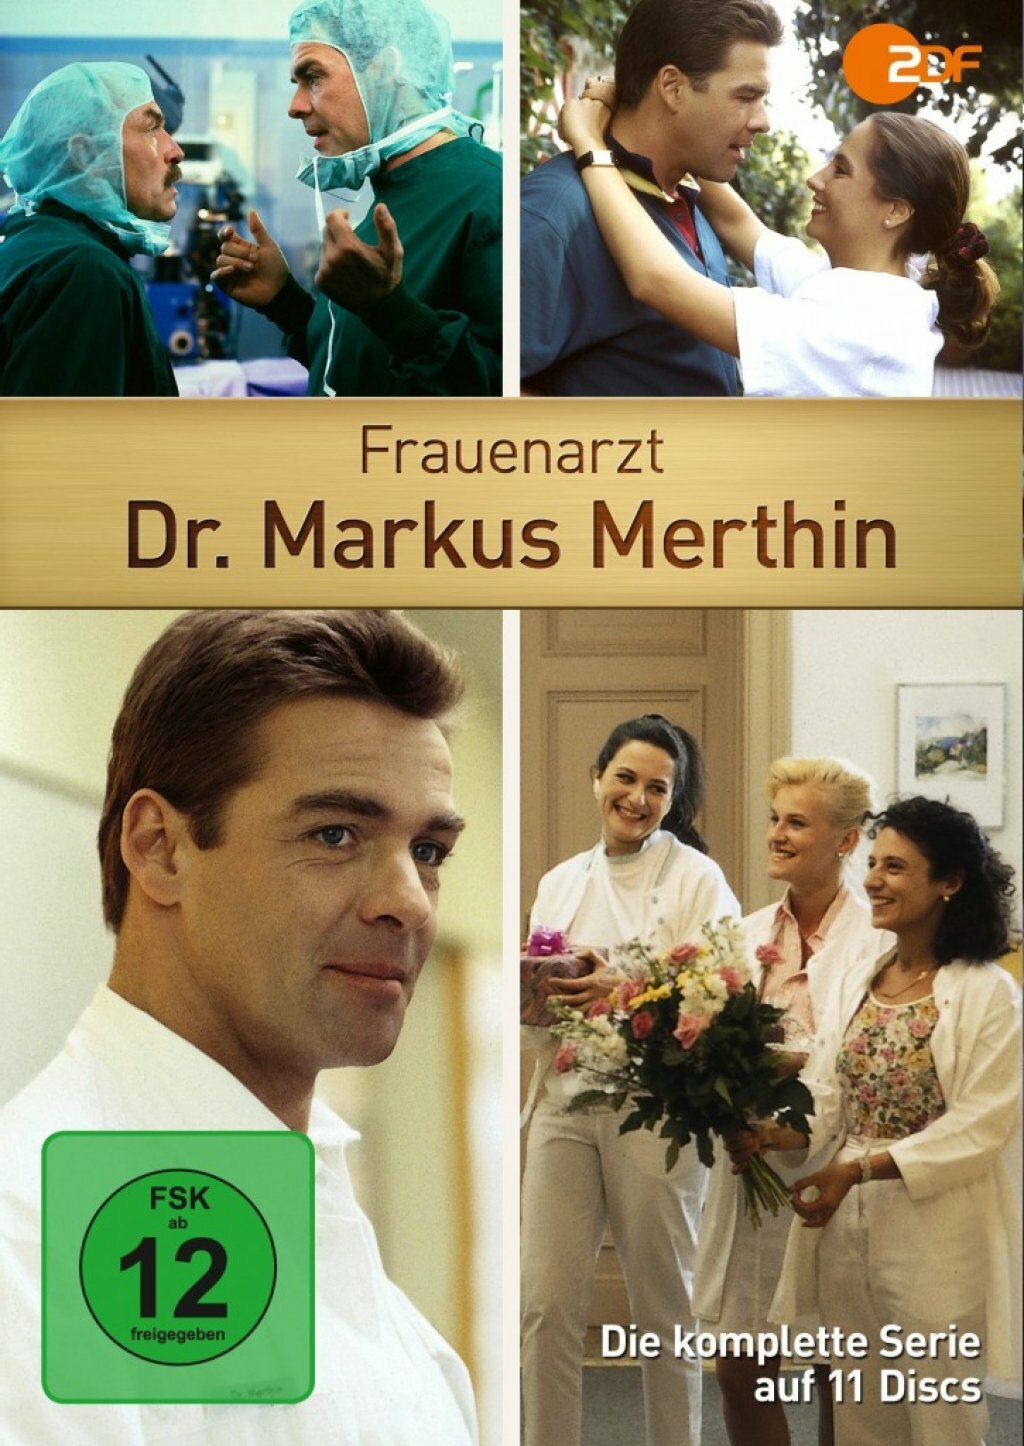 Frauenarzt Dr. Markus Merthin ne zaman